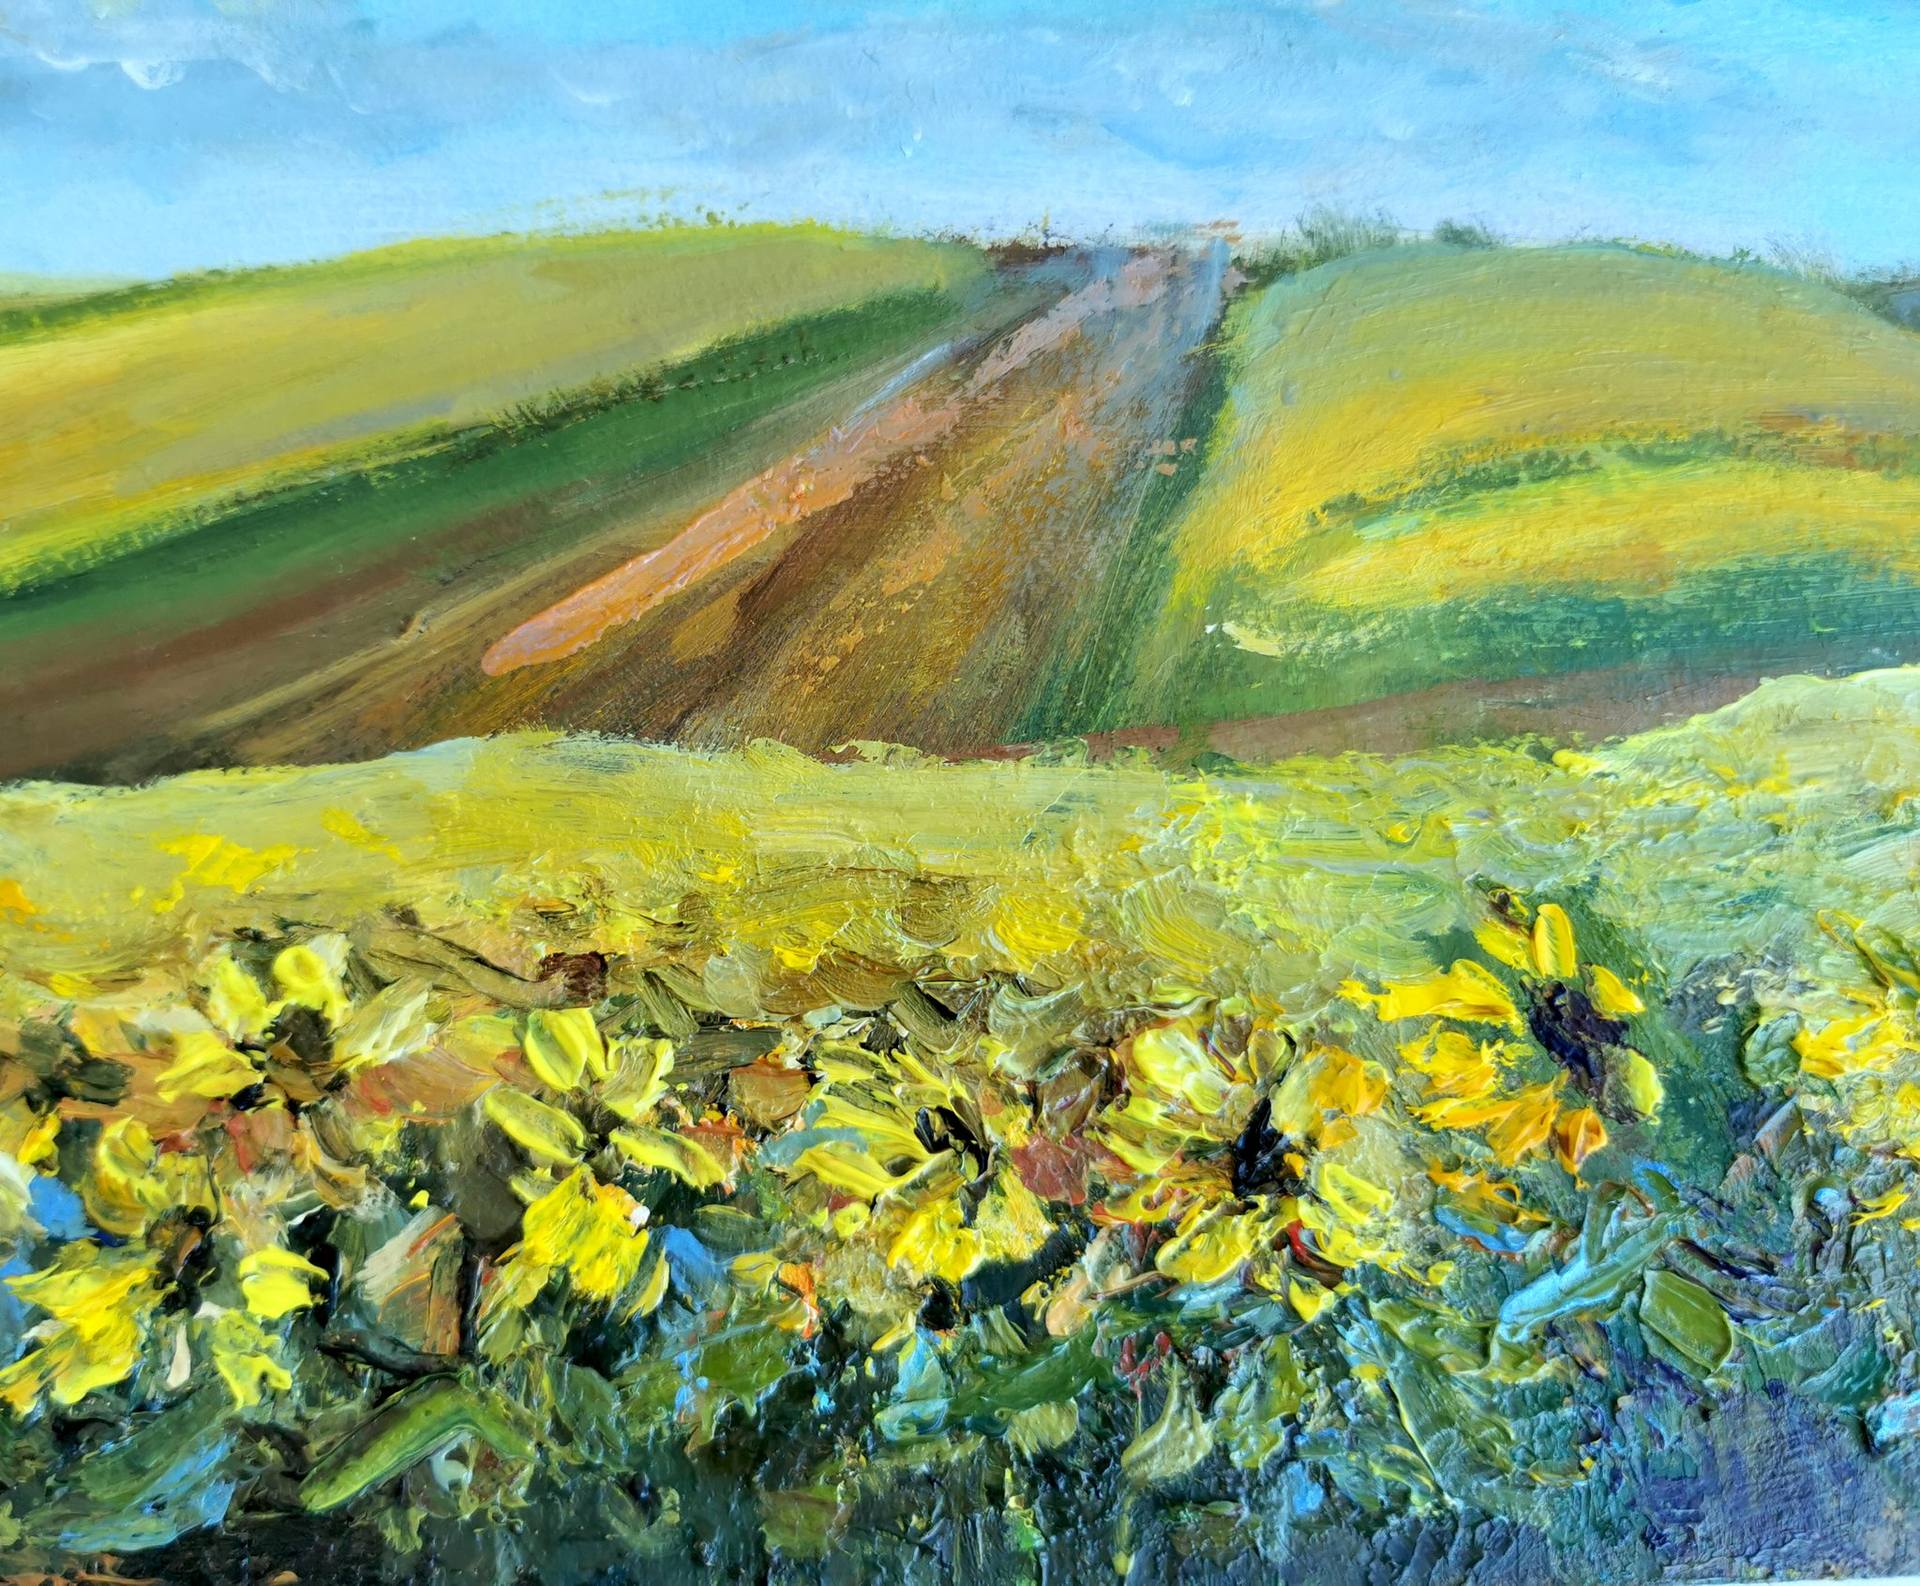 Watch as landscape artist Aalekha paints a field of flowers with water